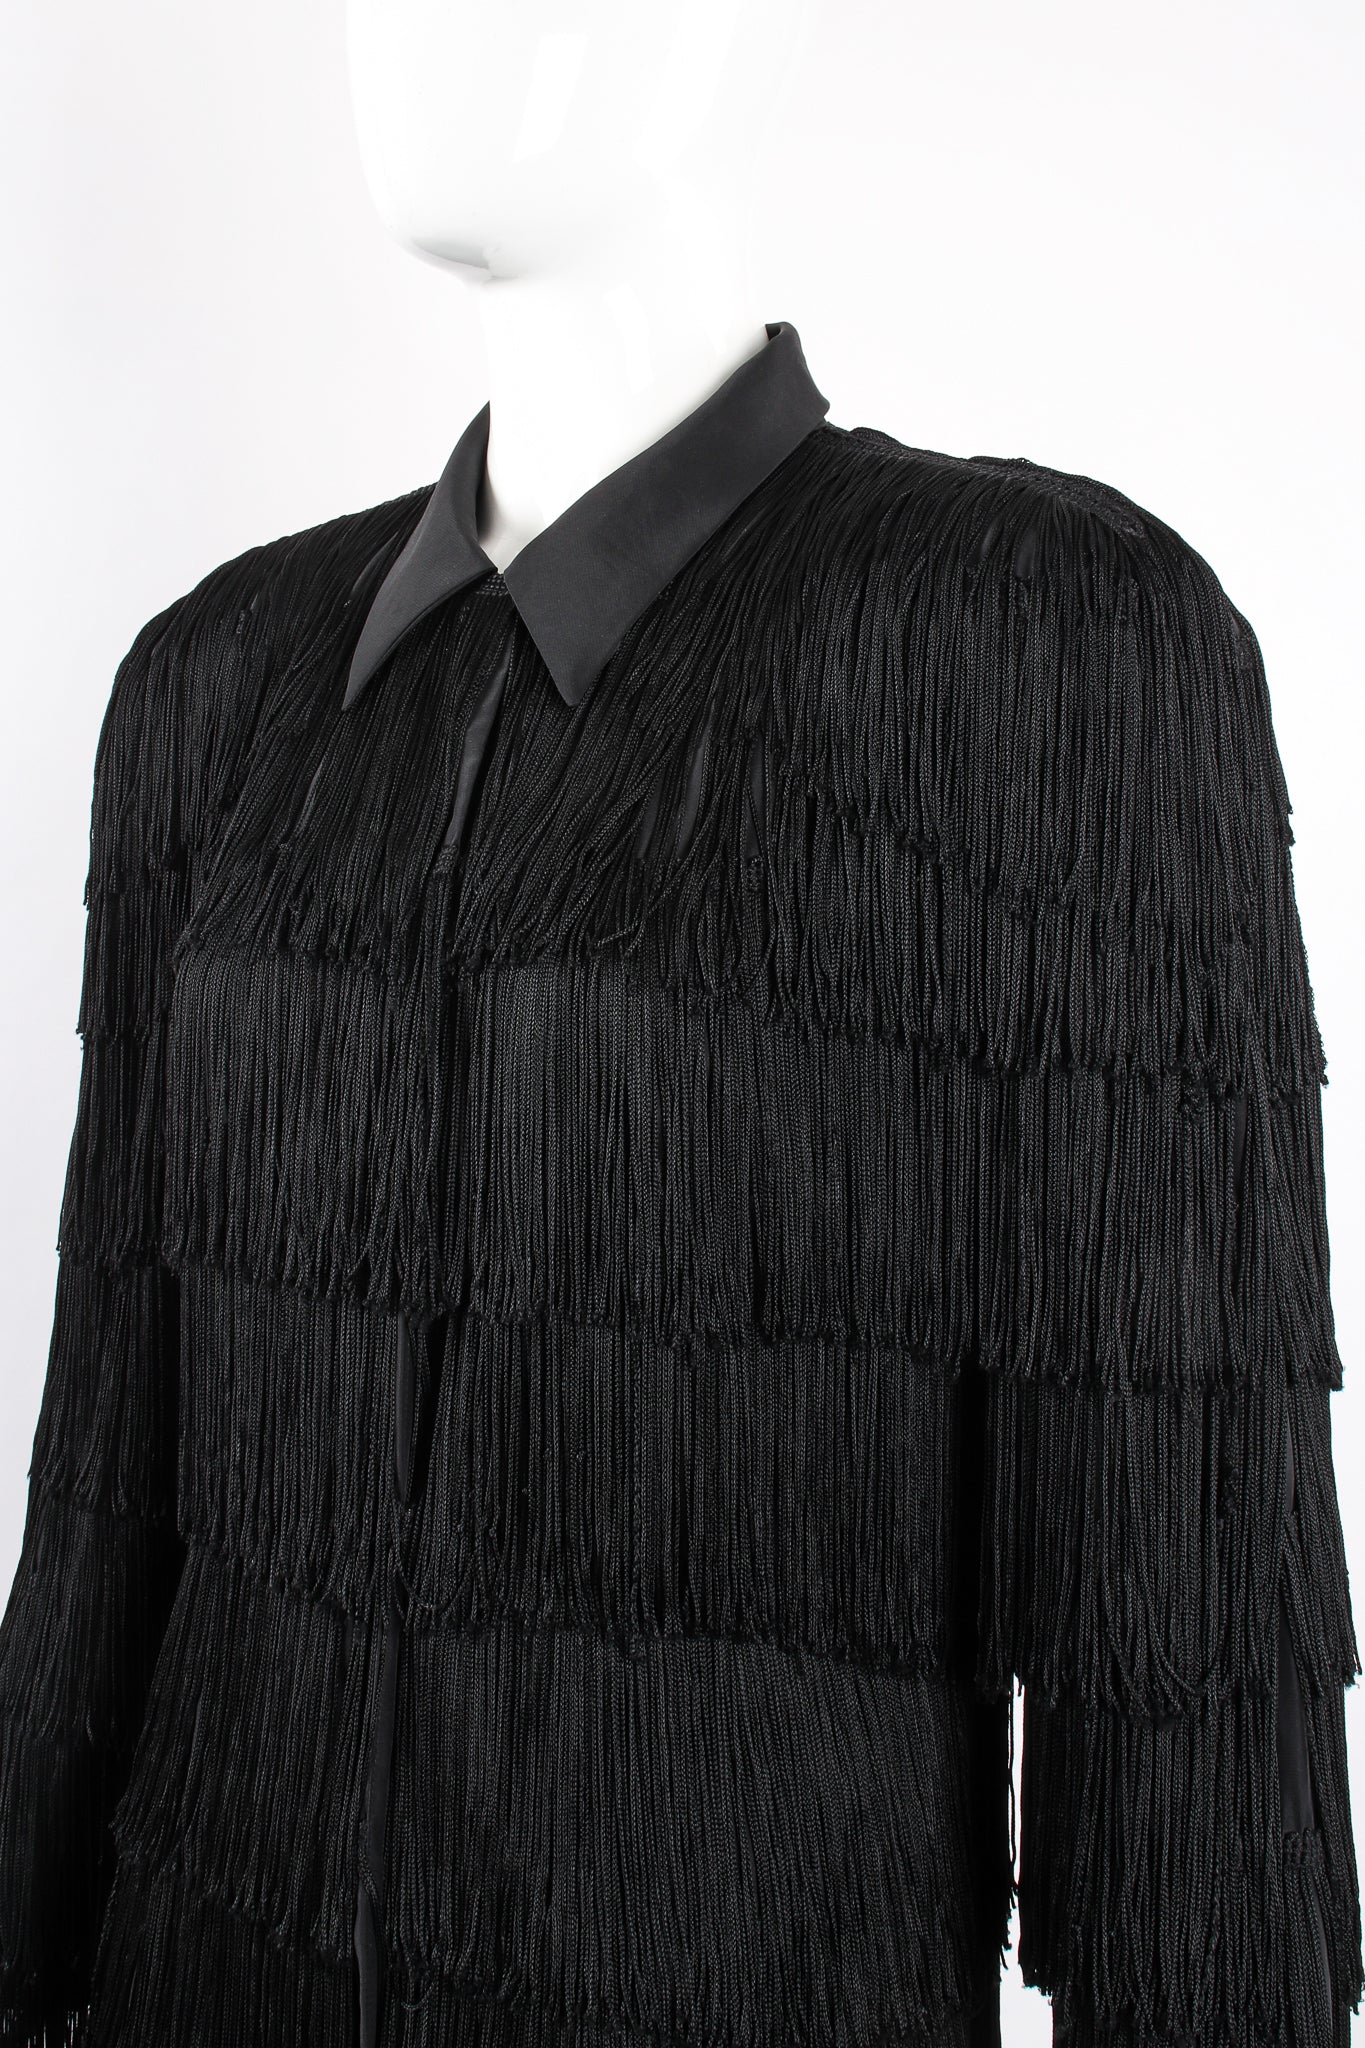 Vintage OMO Norma Kamali Fringed Shirt Dress Jacket on Mannequin crop at Recess Los Angeles